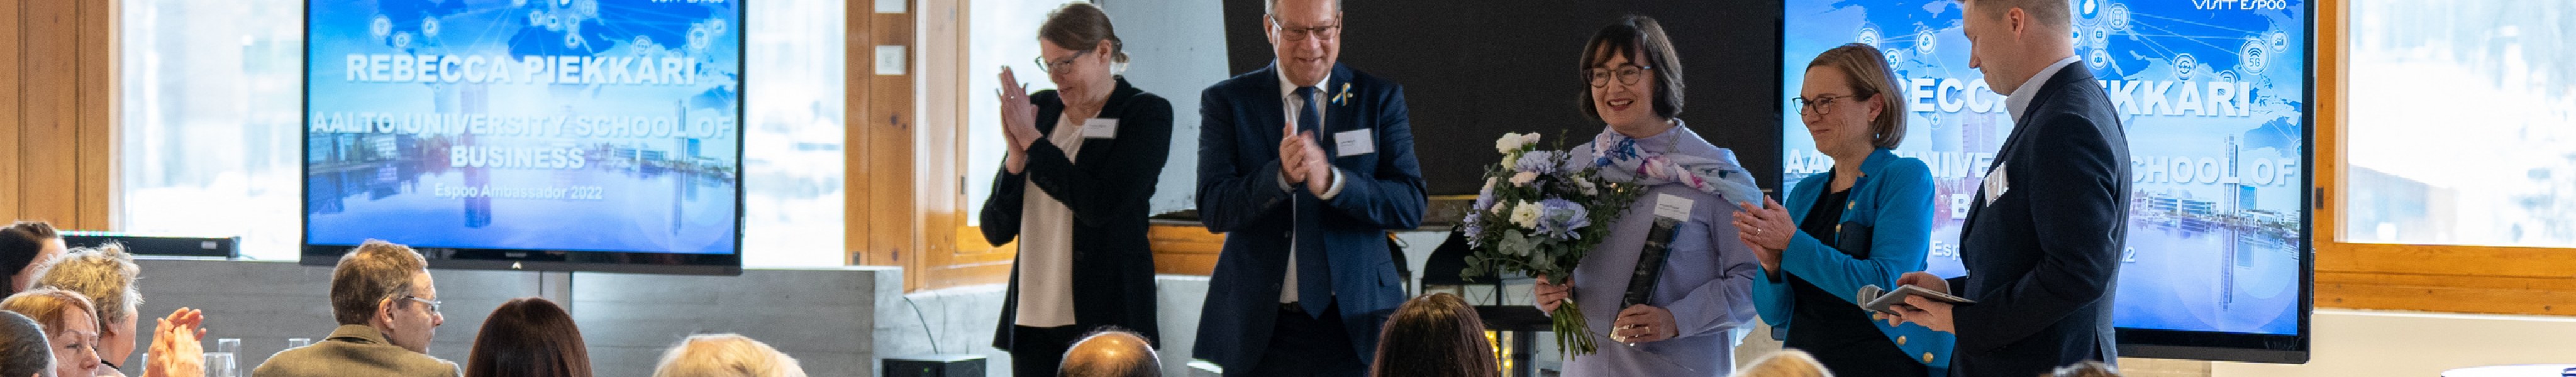 Professor Piekkari receiving the Espoo Ambassador award in front of the audience.